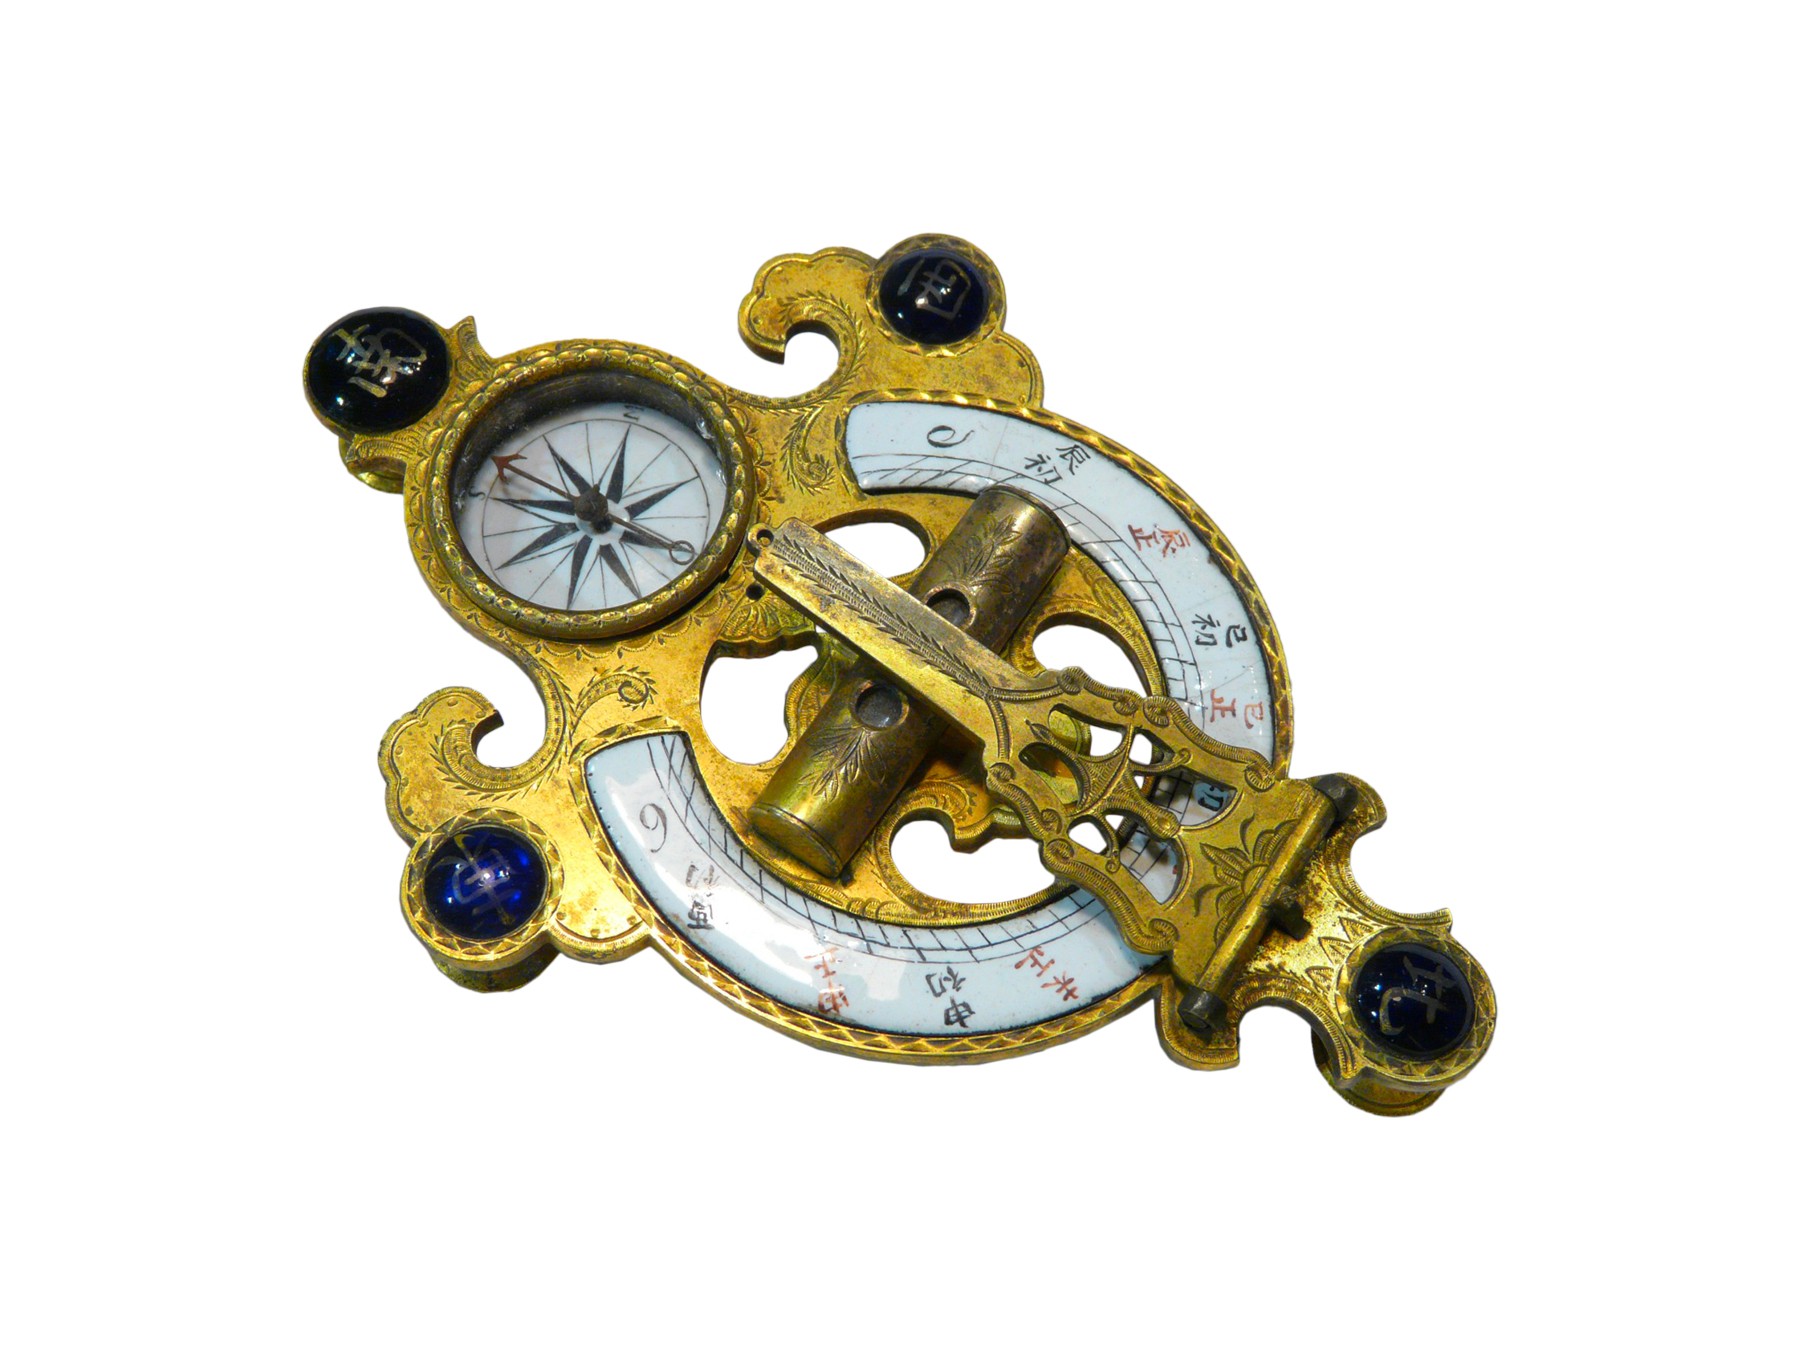 Gilt bronze, enamel and glass sundial compass - China 18th century